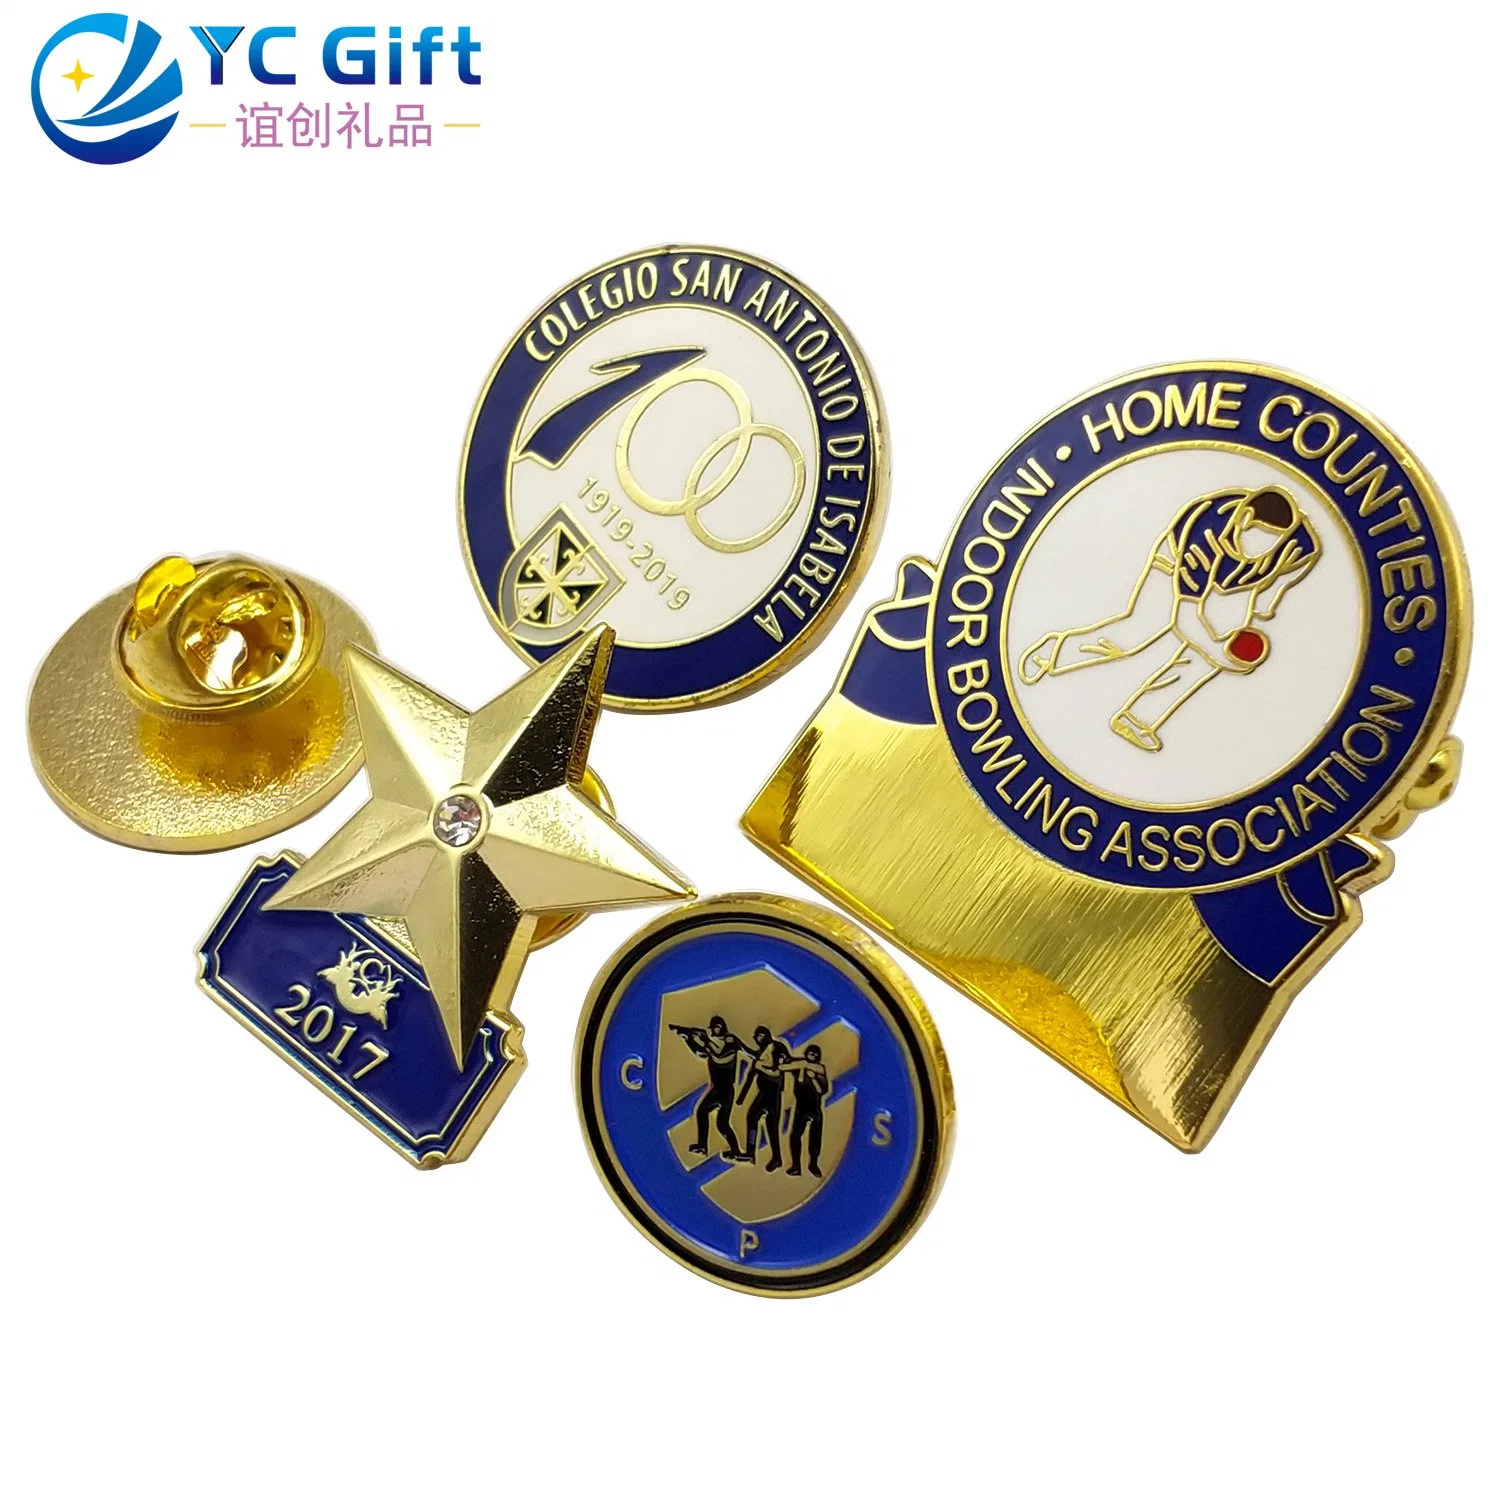 China Maker Custom Metal Crafts Plating Gold Enamel Pentagram Emblem School Sport Souvenir Button Badges Award Army Military Police Lapel Pins with Logo